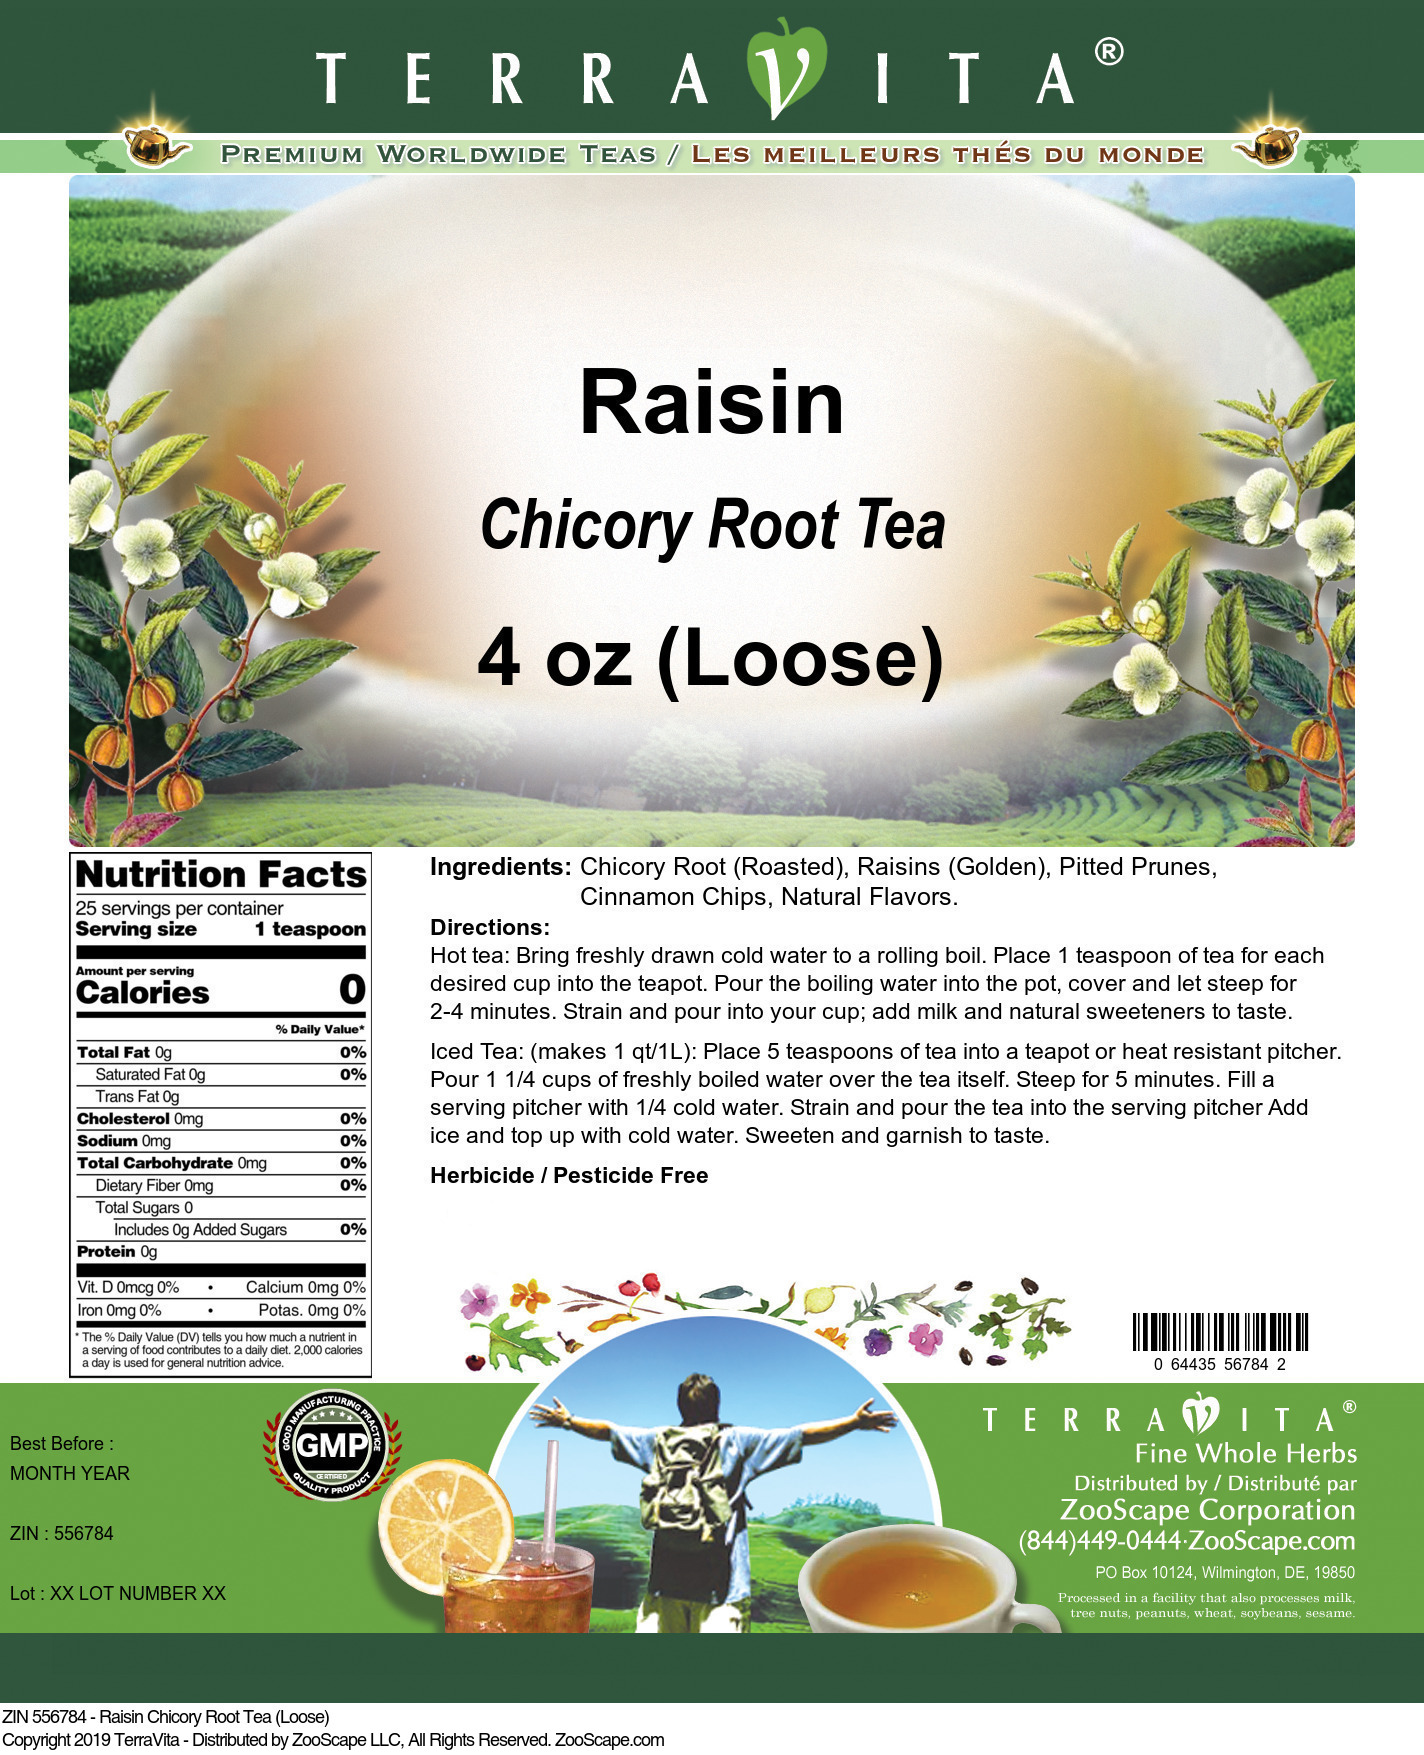 Raisin Chicory Root Tea (Loose) - Label